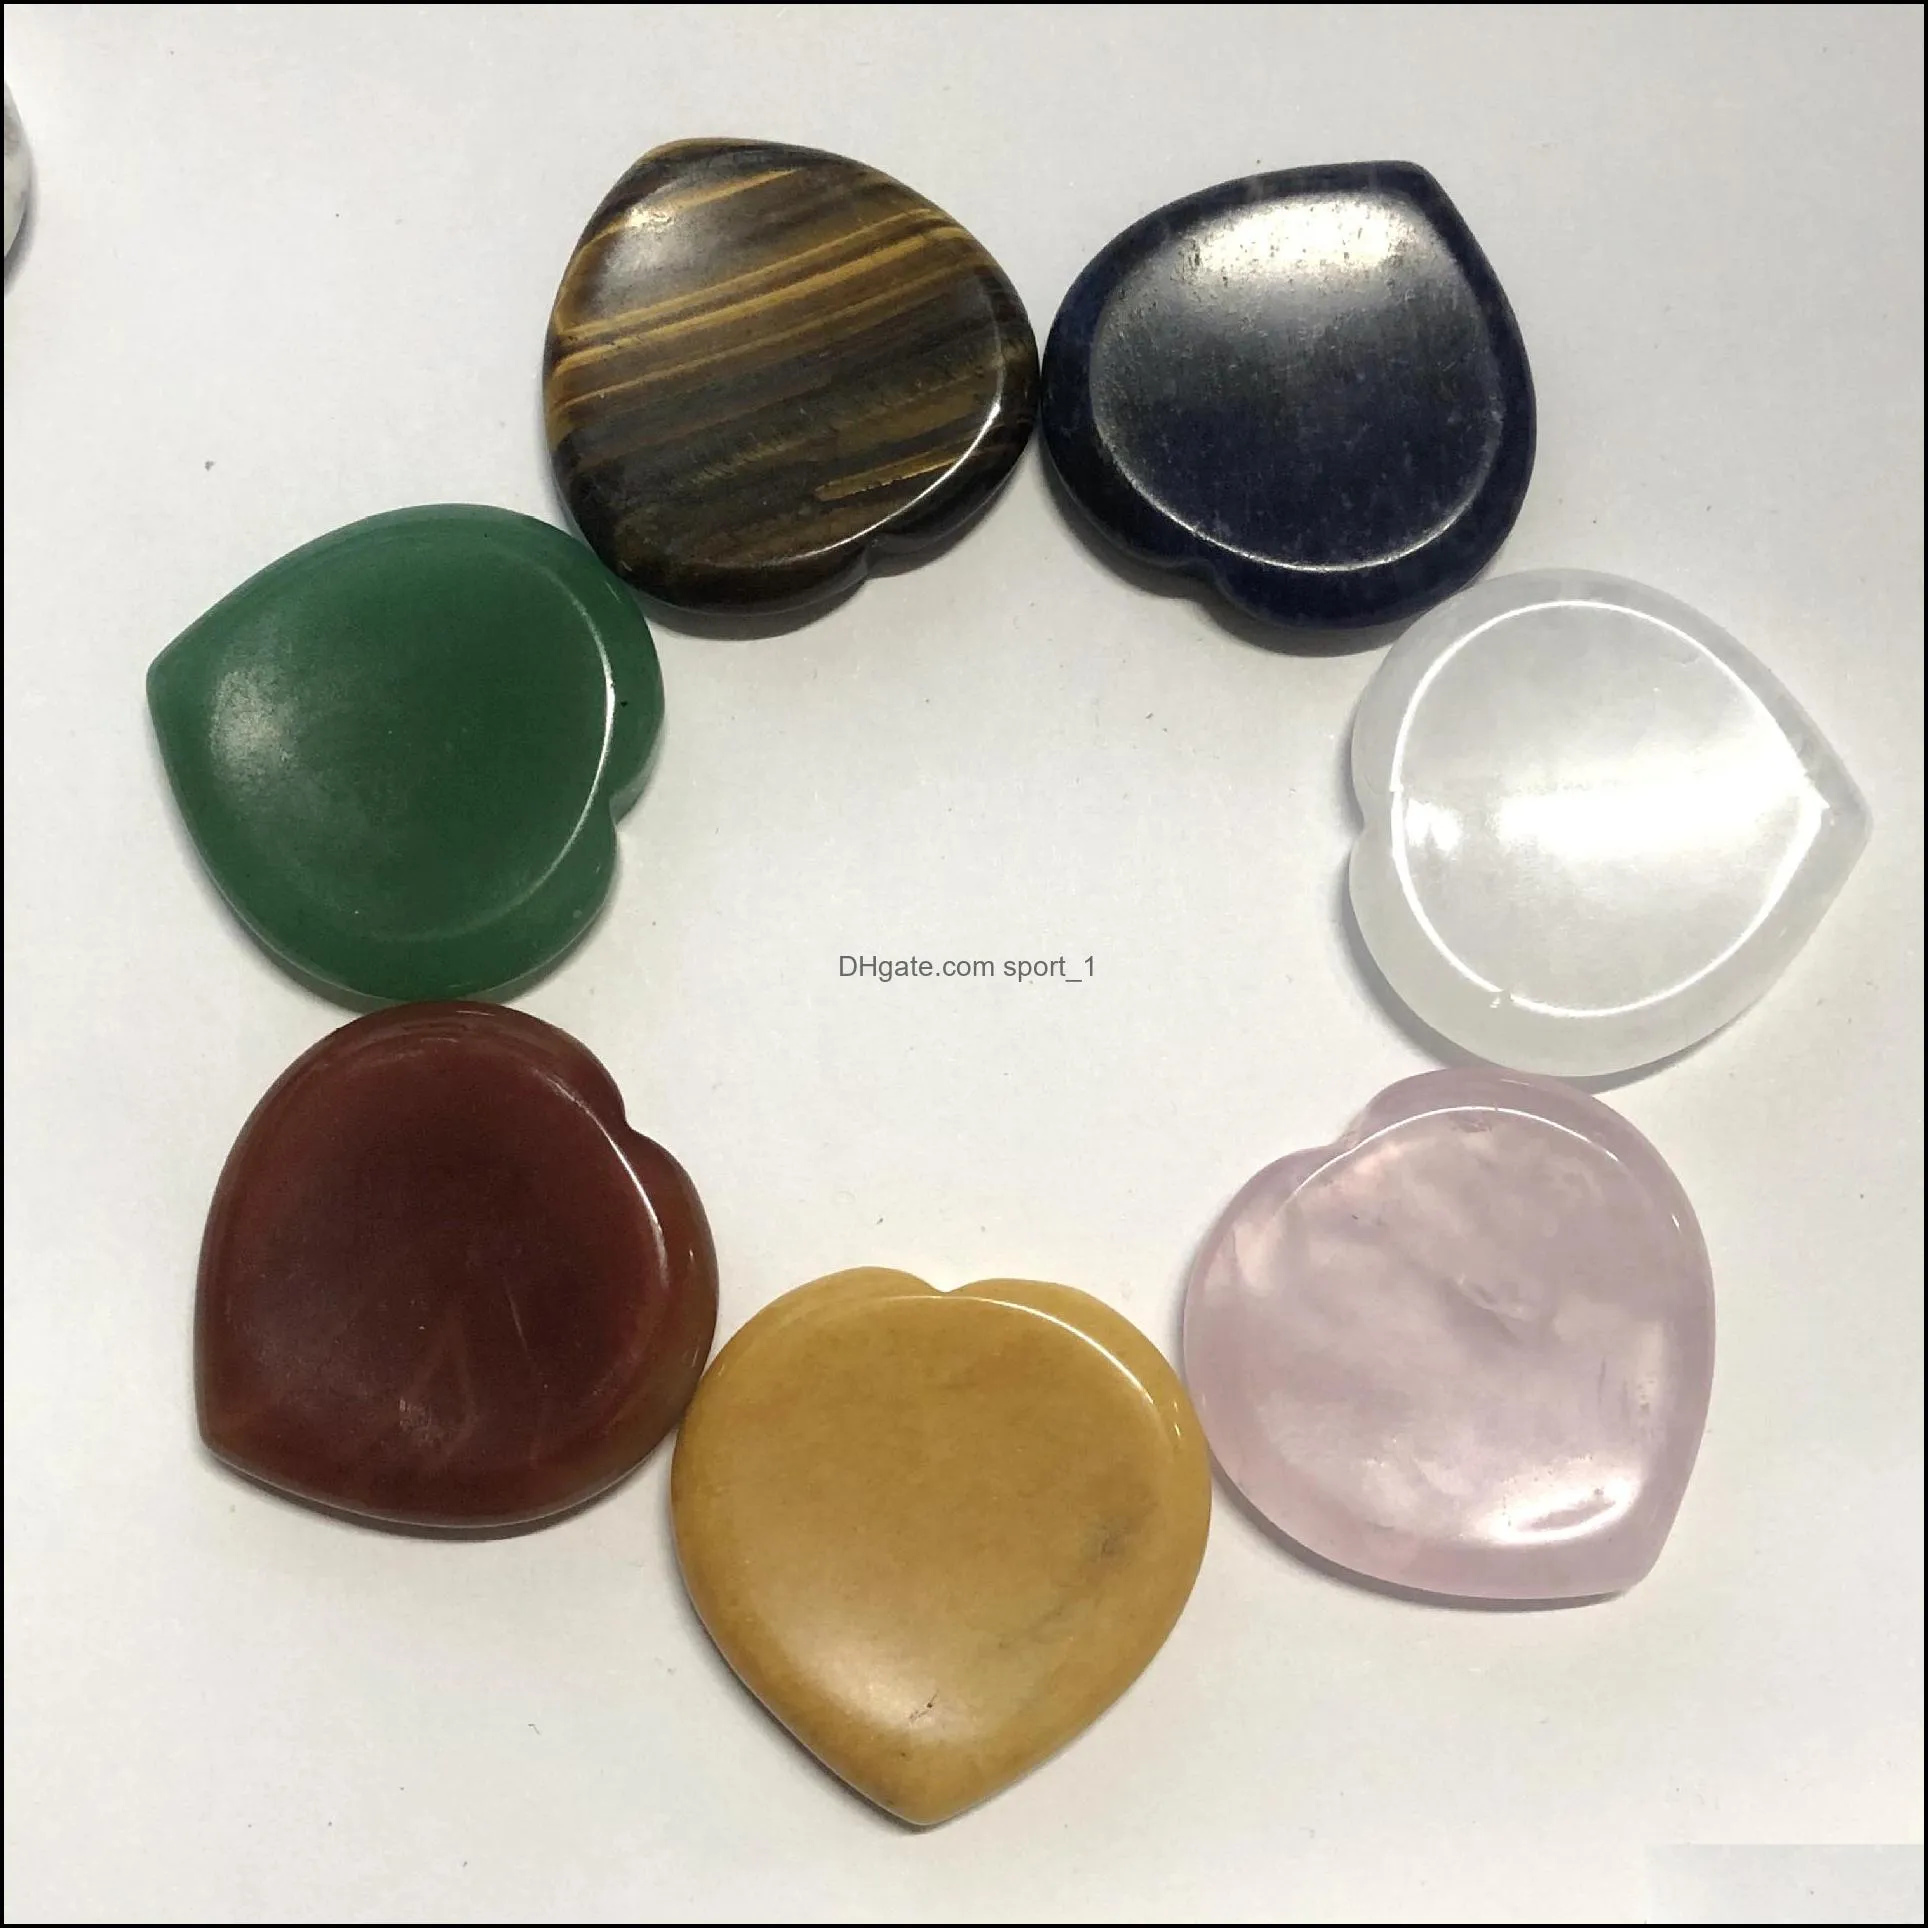 40x7mm heart worry stone thumb gemstone natural healing crystals therapy reiki treatment spiritual minerals massage palm gem